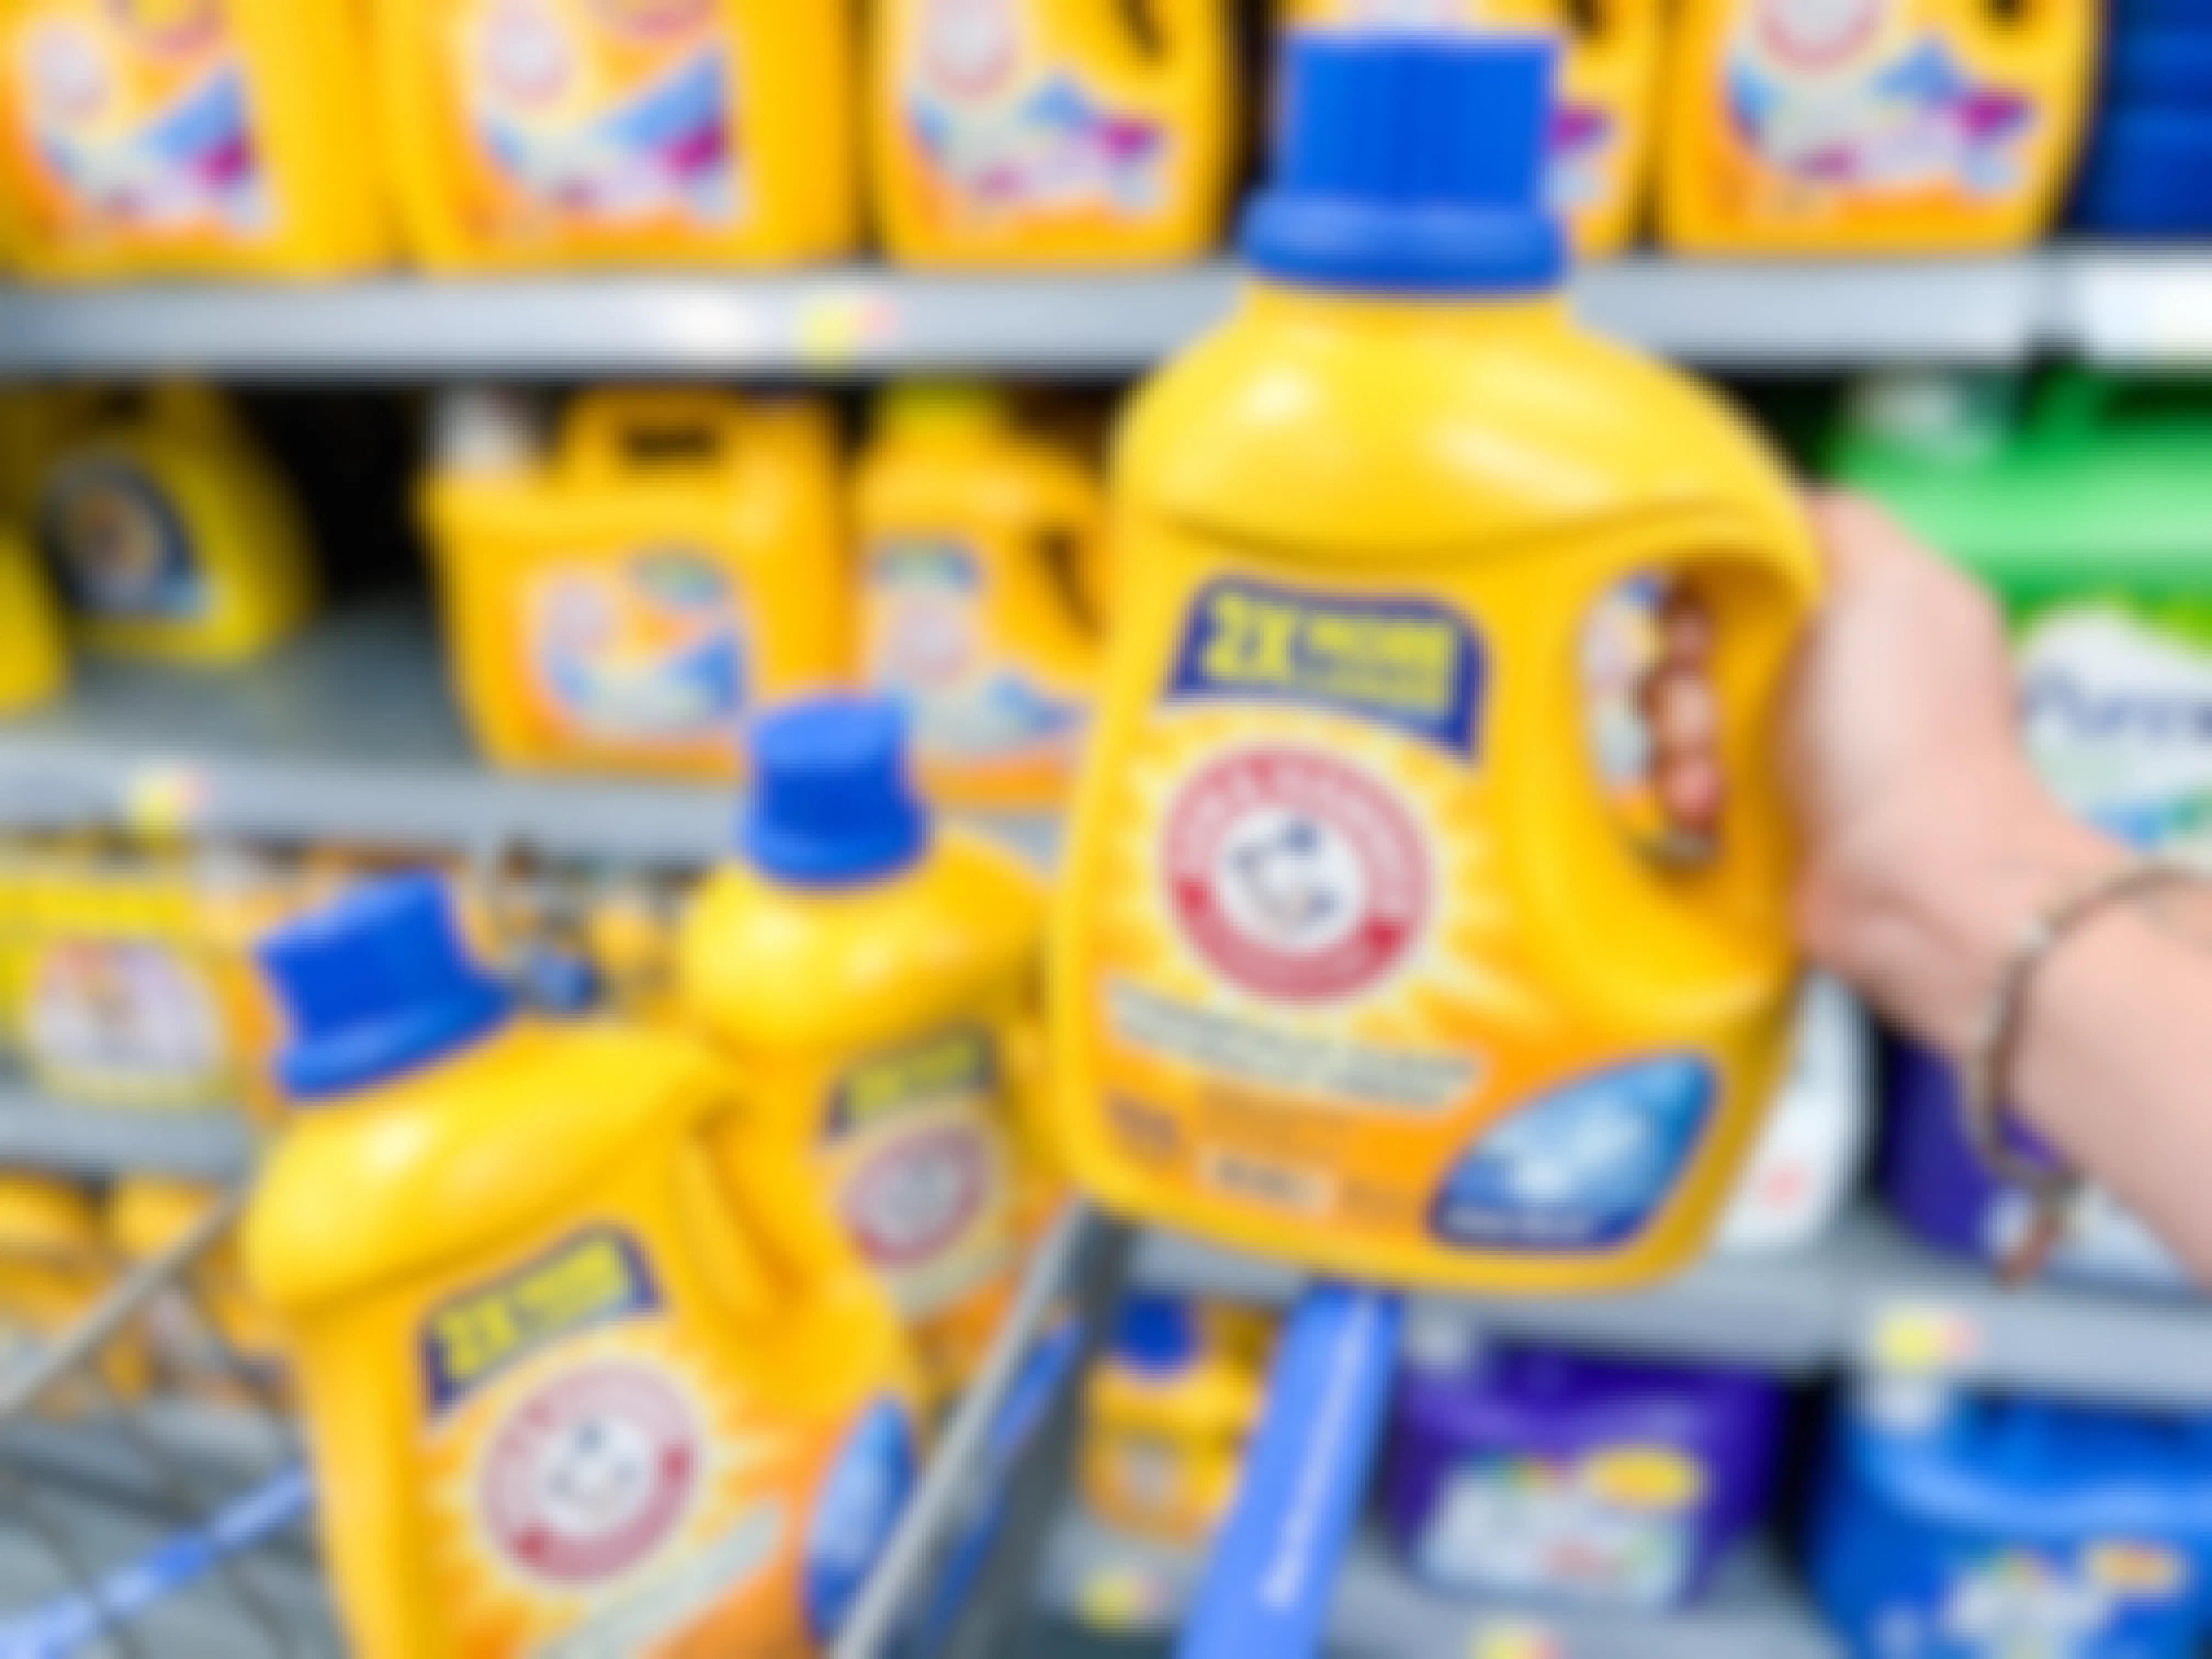 Walgreens Deals Under $1: Cheap Laundry Detergent, Tissues & More